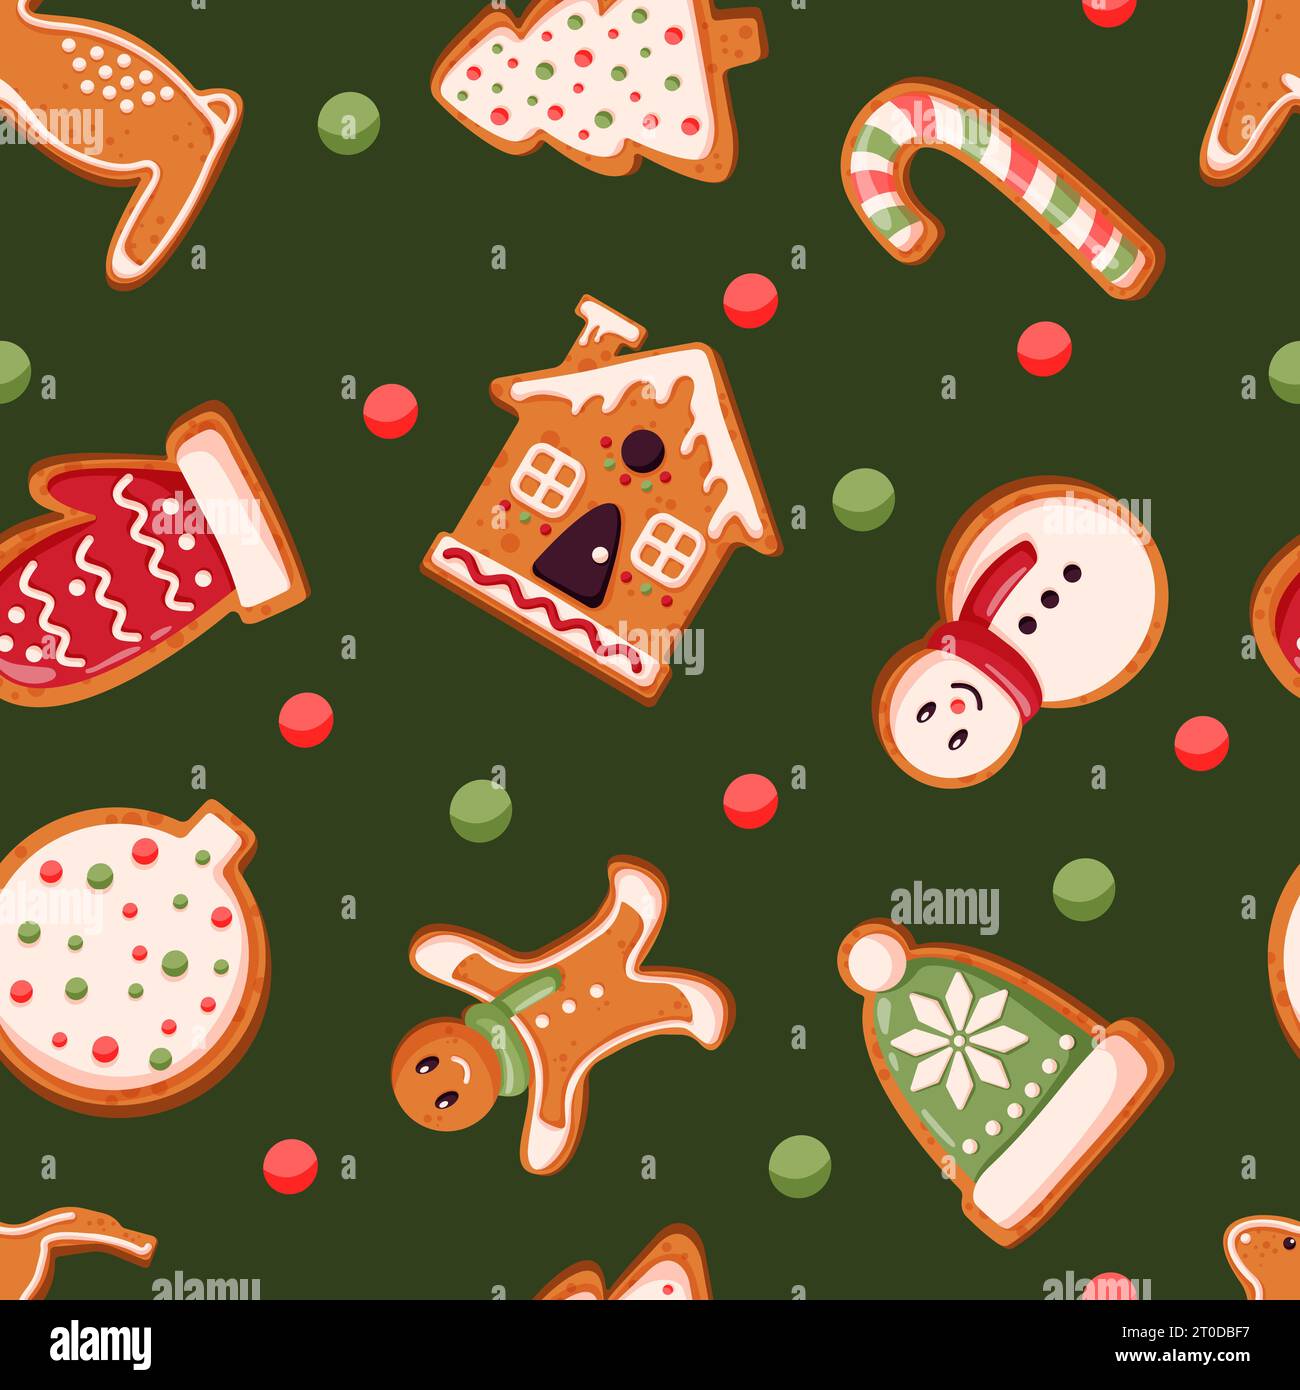 Gingerbread cookies seamless pattern in cartoon style. Winter baked goods in shape of house, gingerbread man, christmas tree, reindeer, mitten Stock Vector